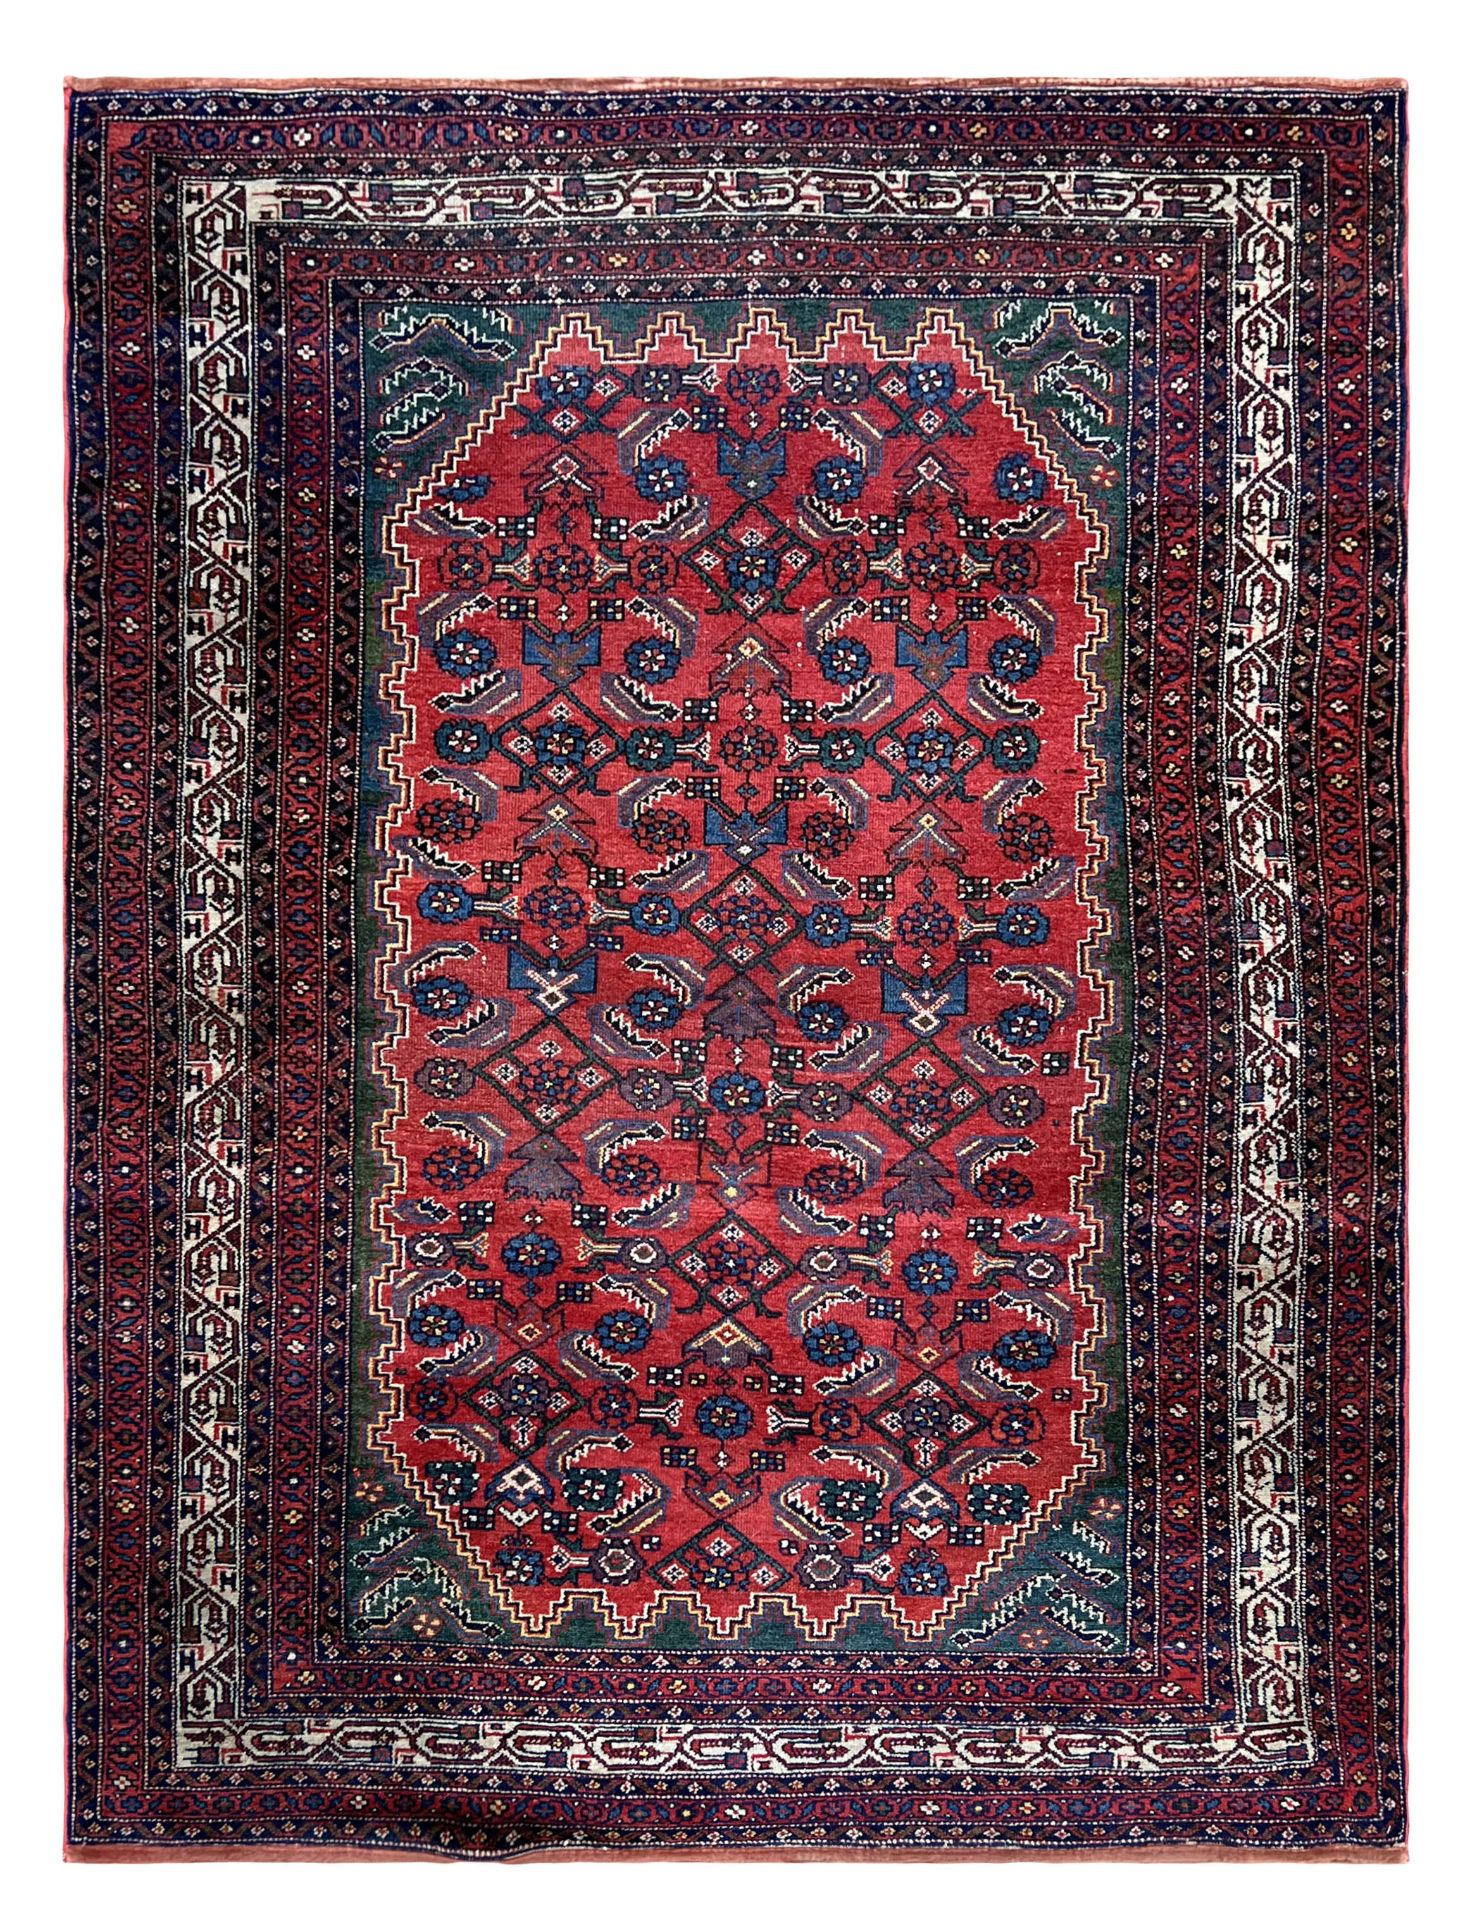 Malay. Fine. Oriental carpet. Circa 1910.